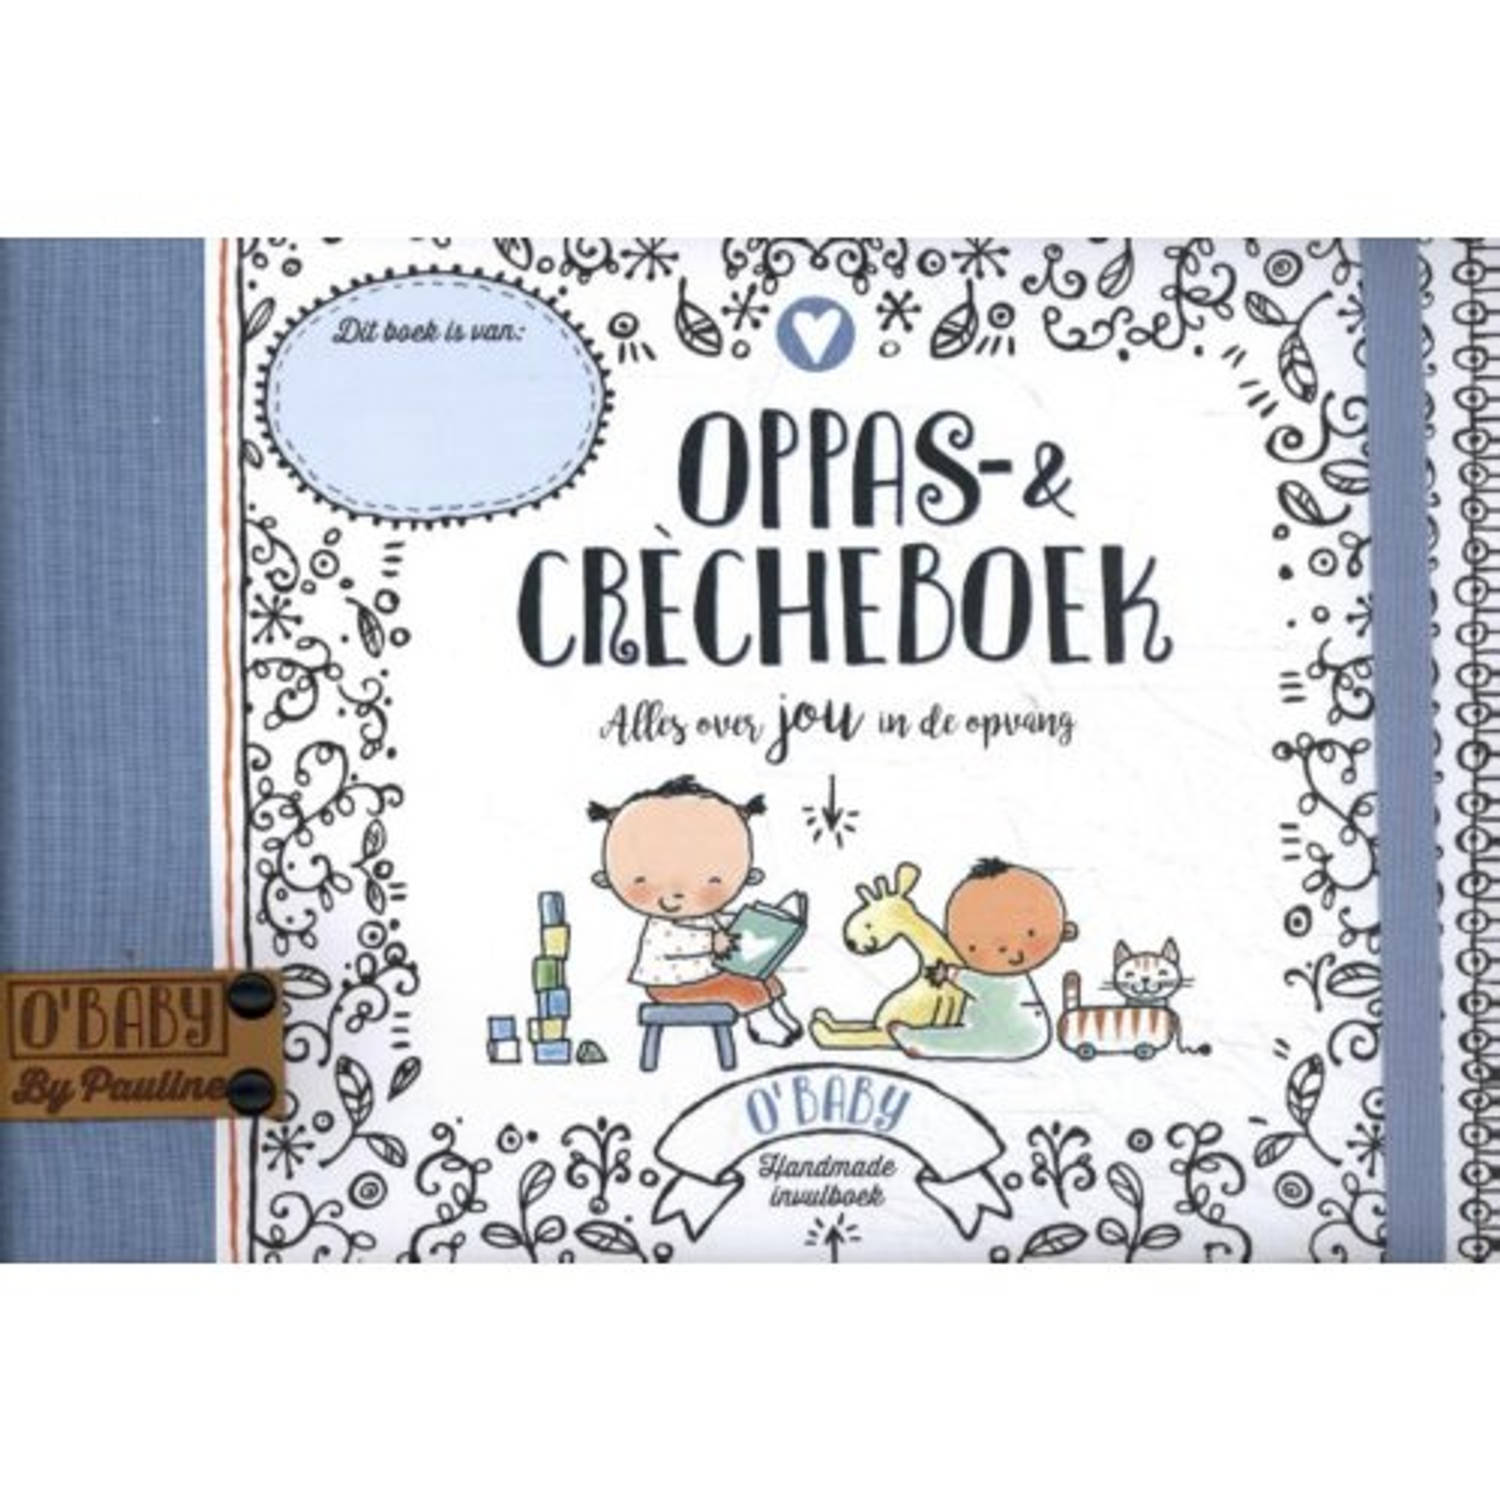 Image Books oppas & crècheboek - o&apos;baby by pauline